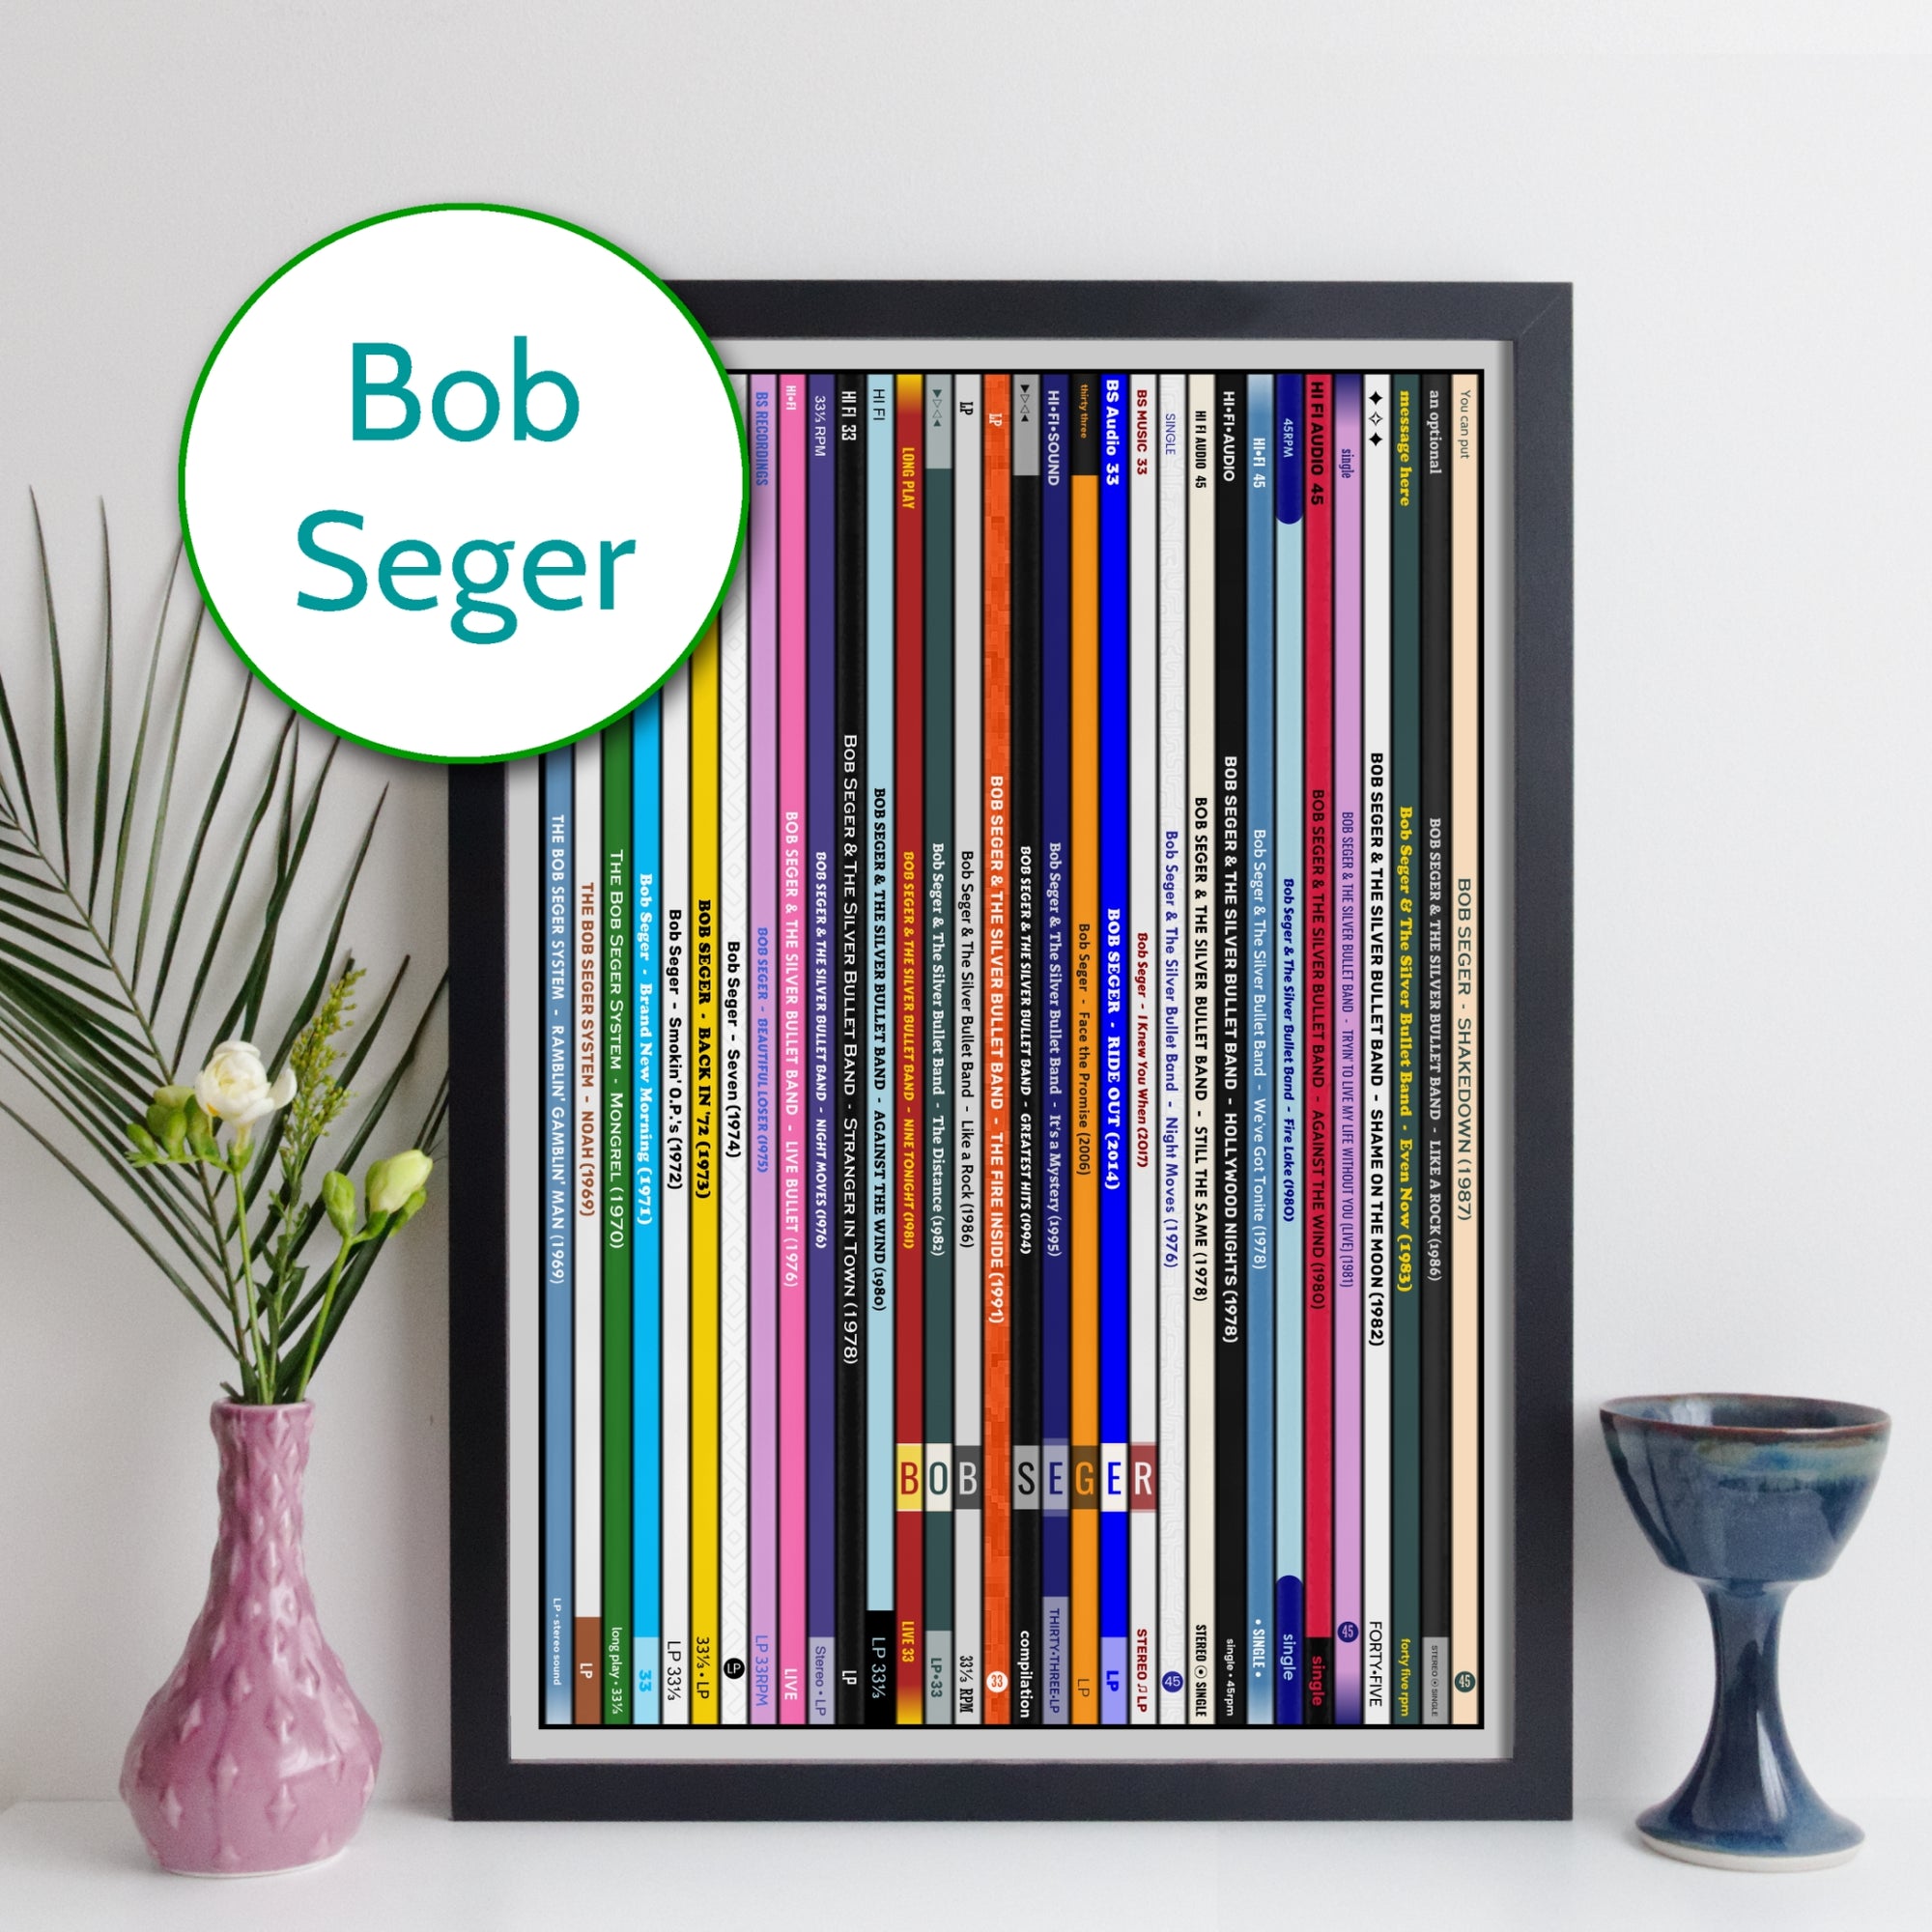 Bob Seger Discography Print